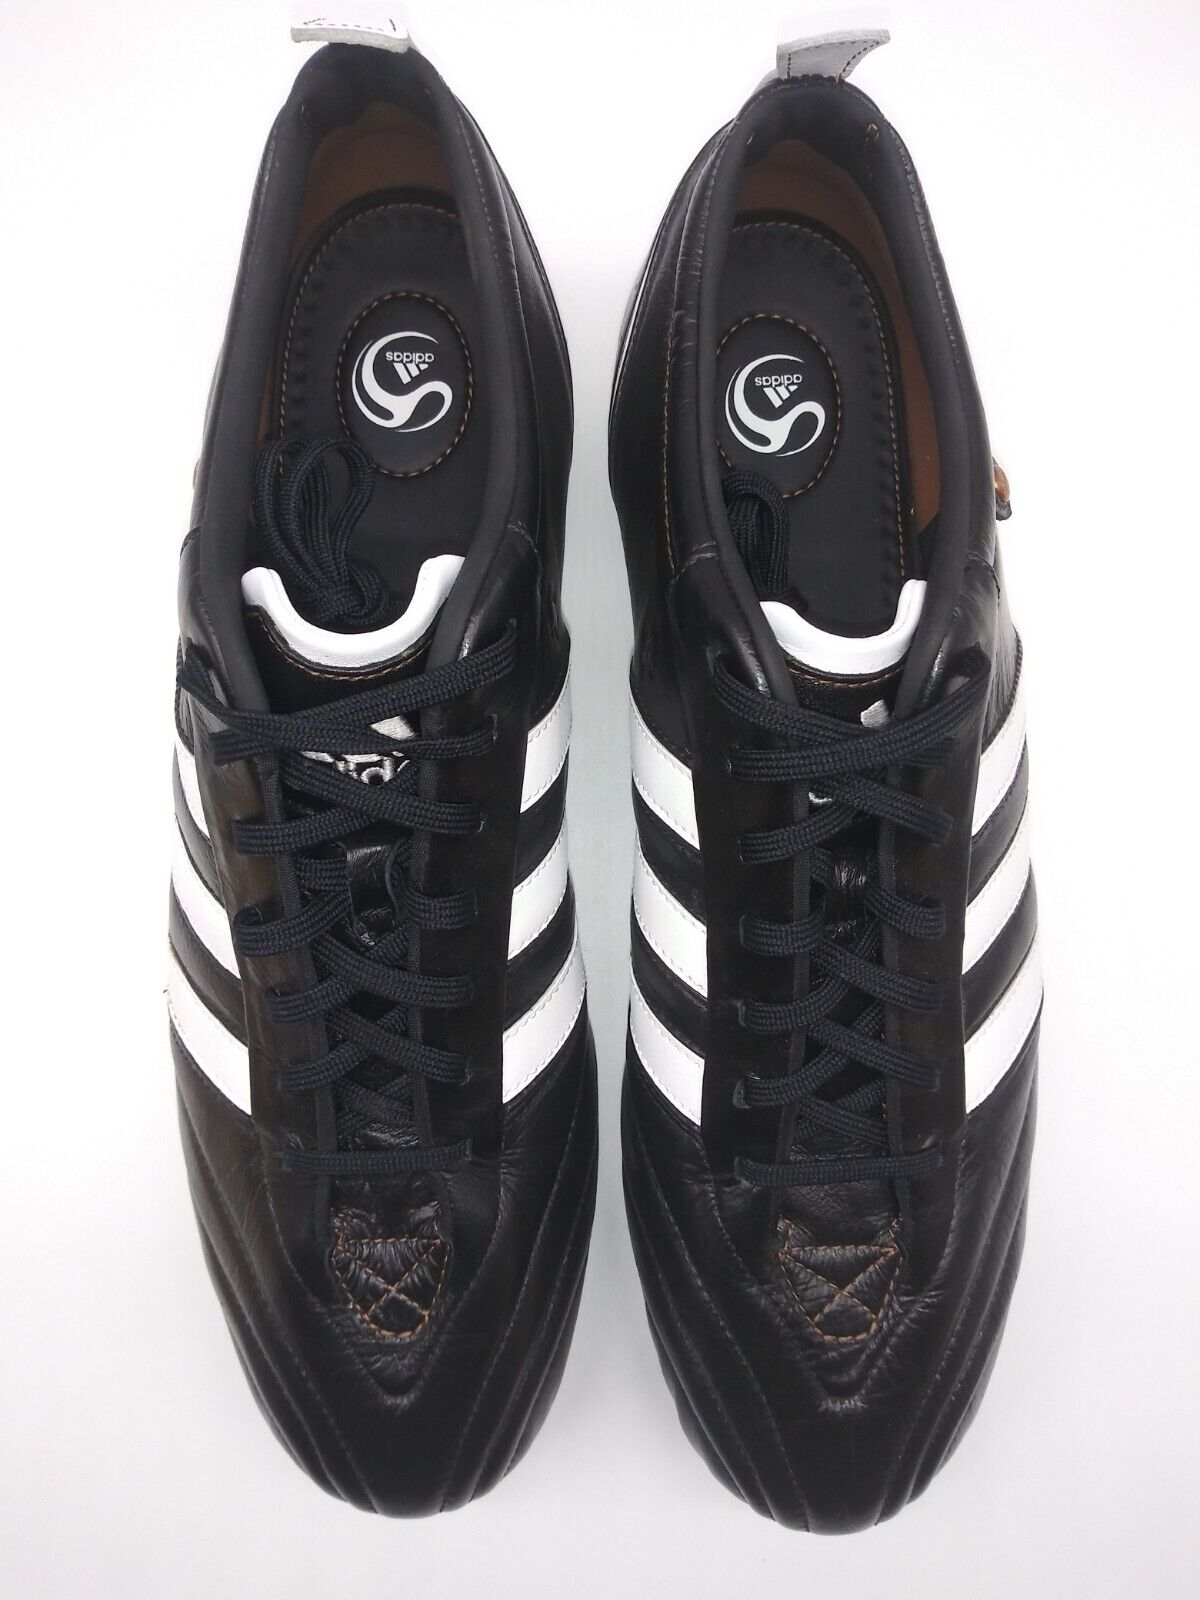 Adidas Mens Rare Adipure TRX FG 661813 Black White Soccer Cleats